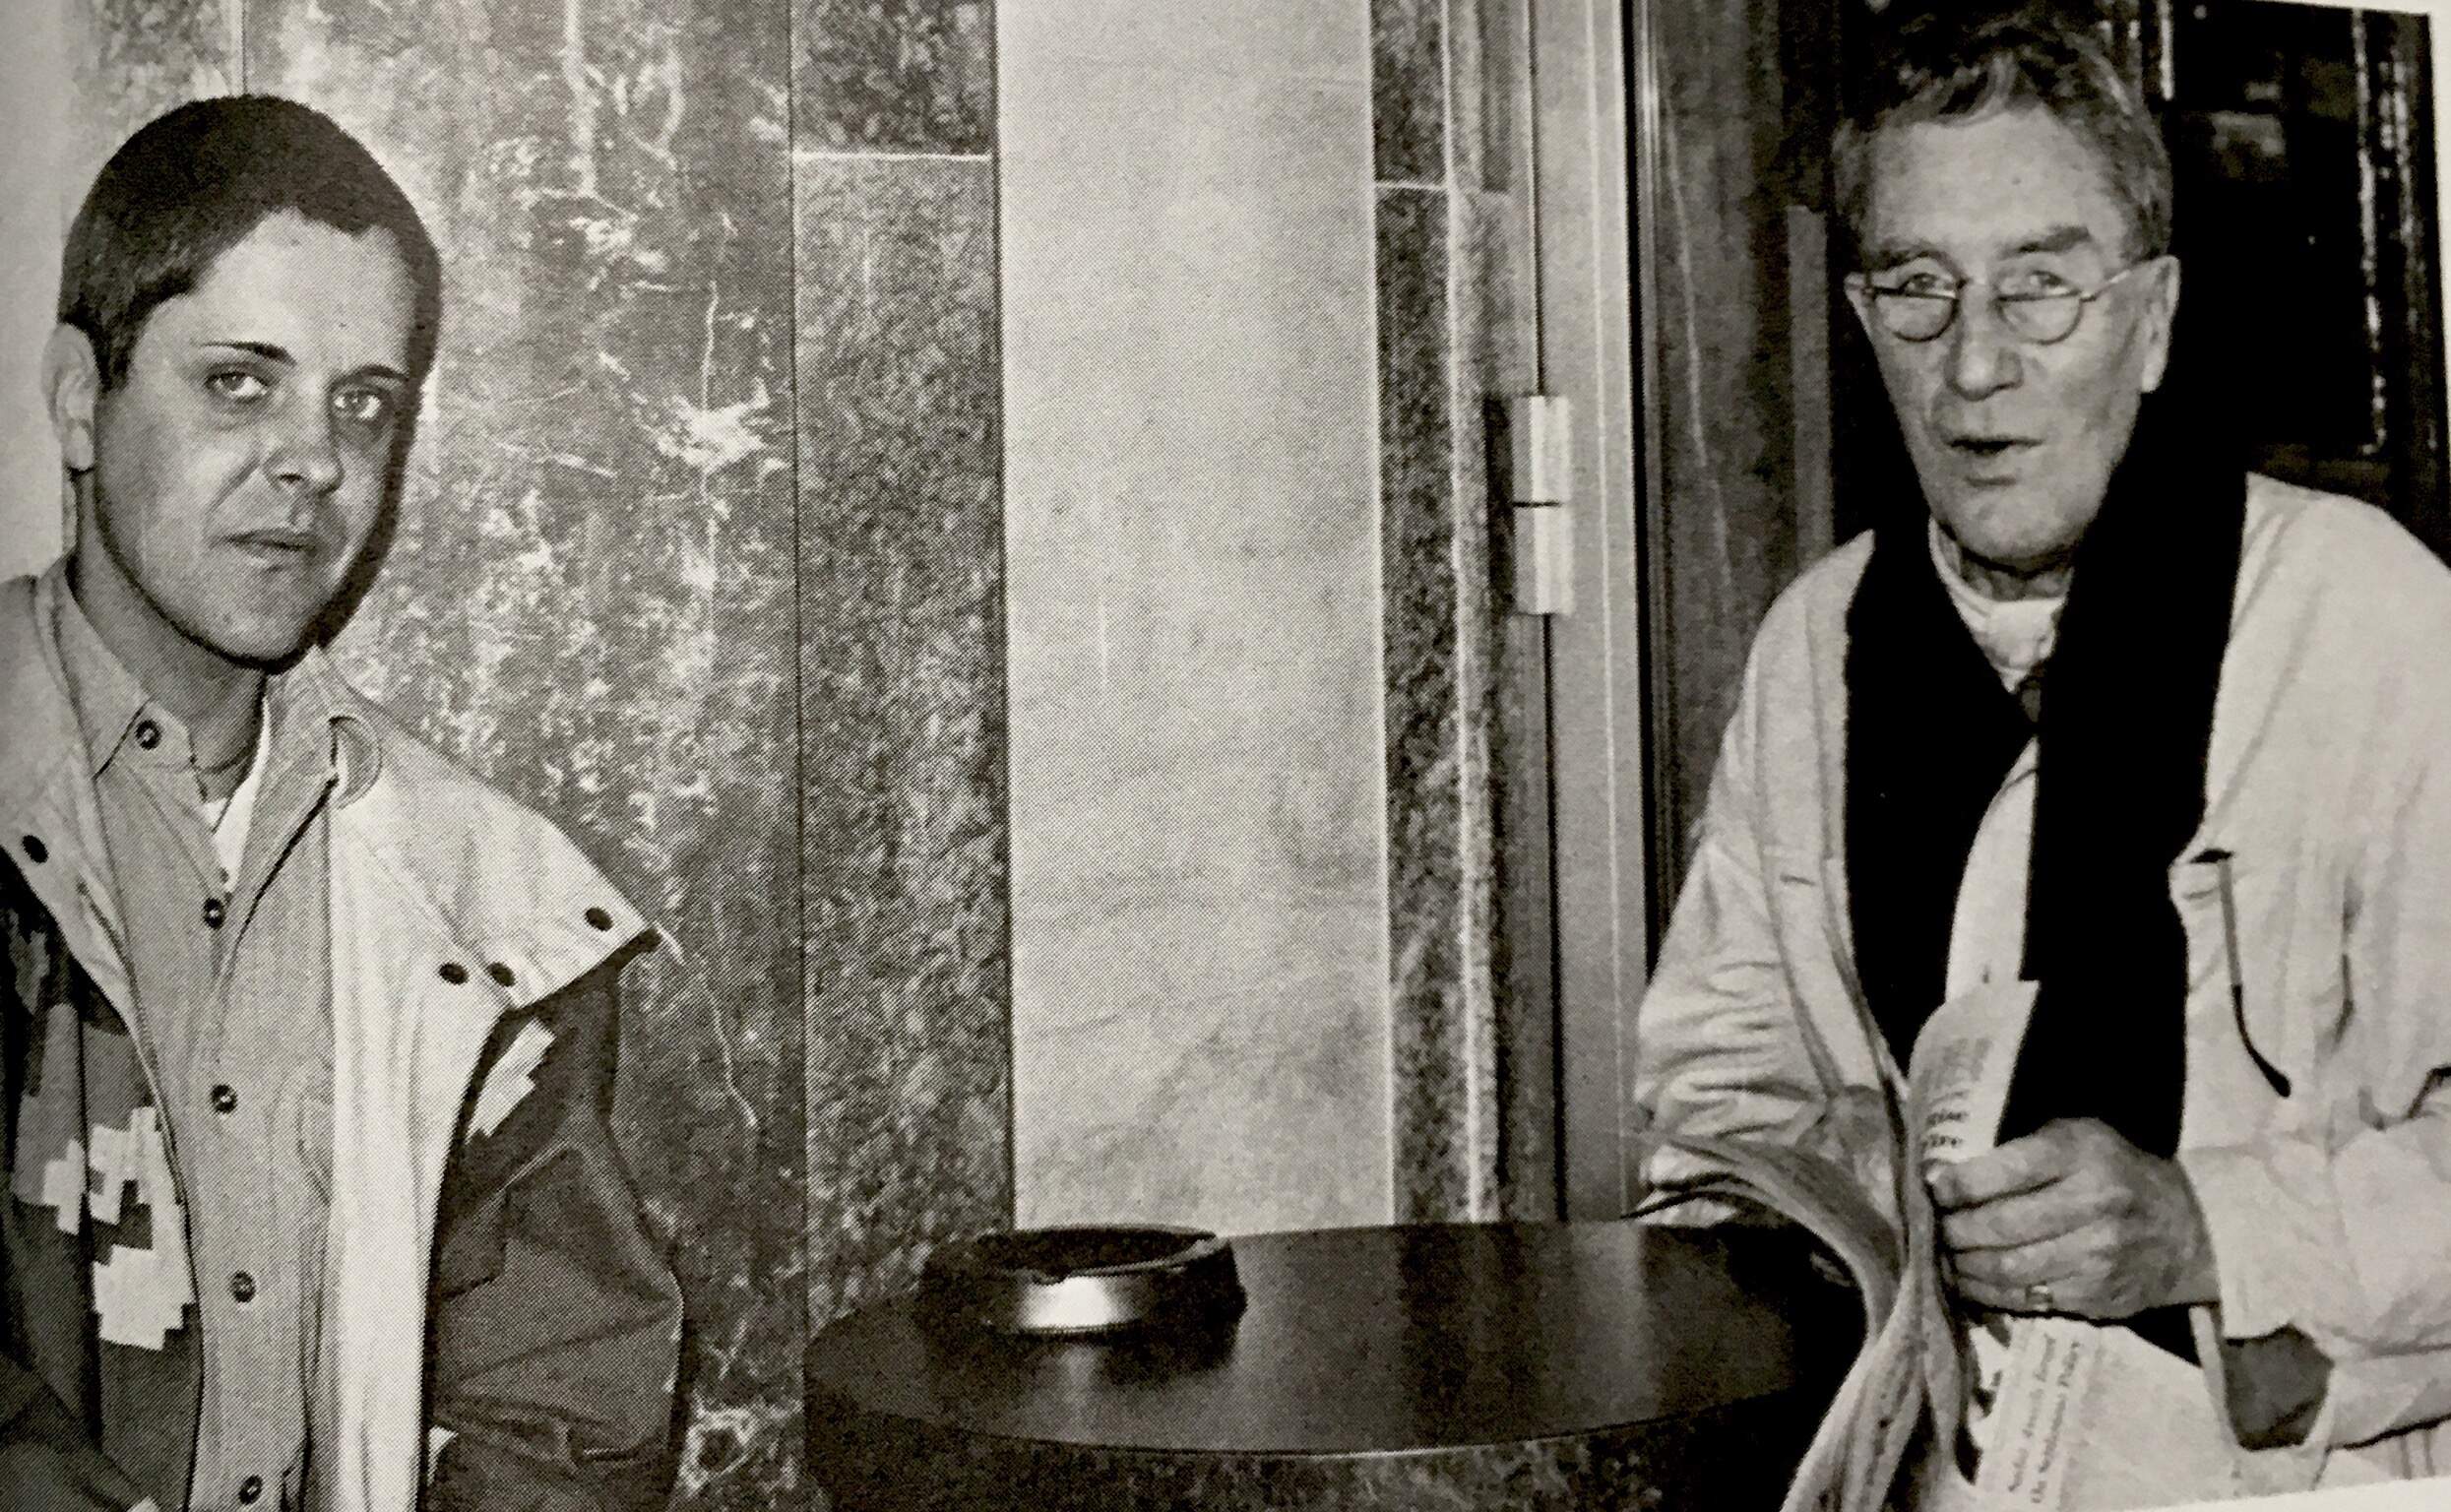 RE SEARCH William Burroughs Throbbing Gristle Brion Gysin, Signed by Genesis P-Orridge